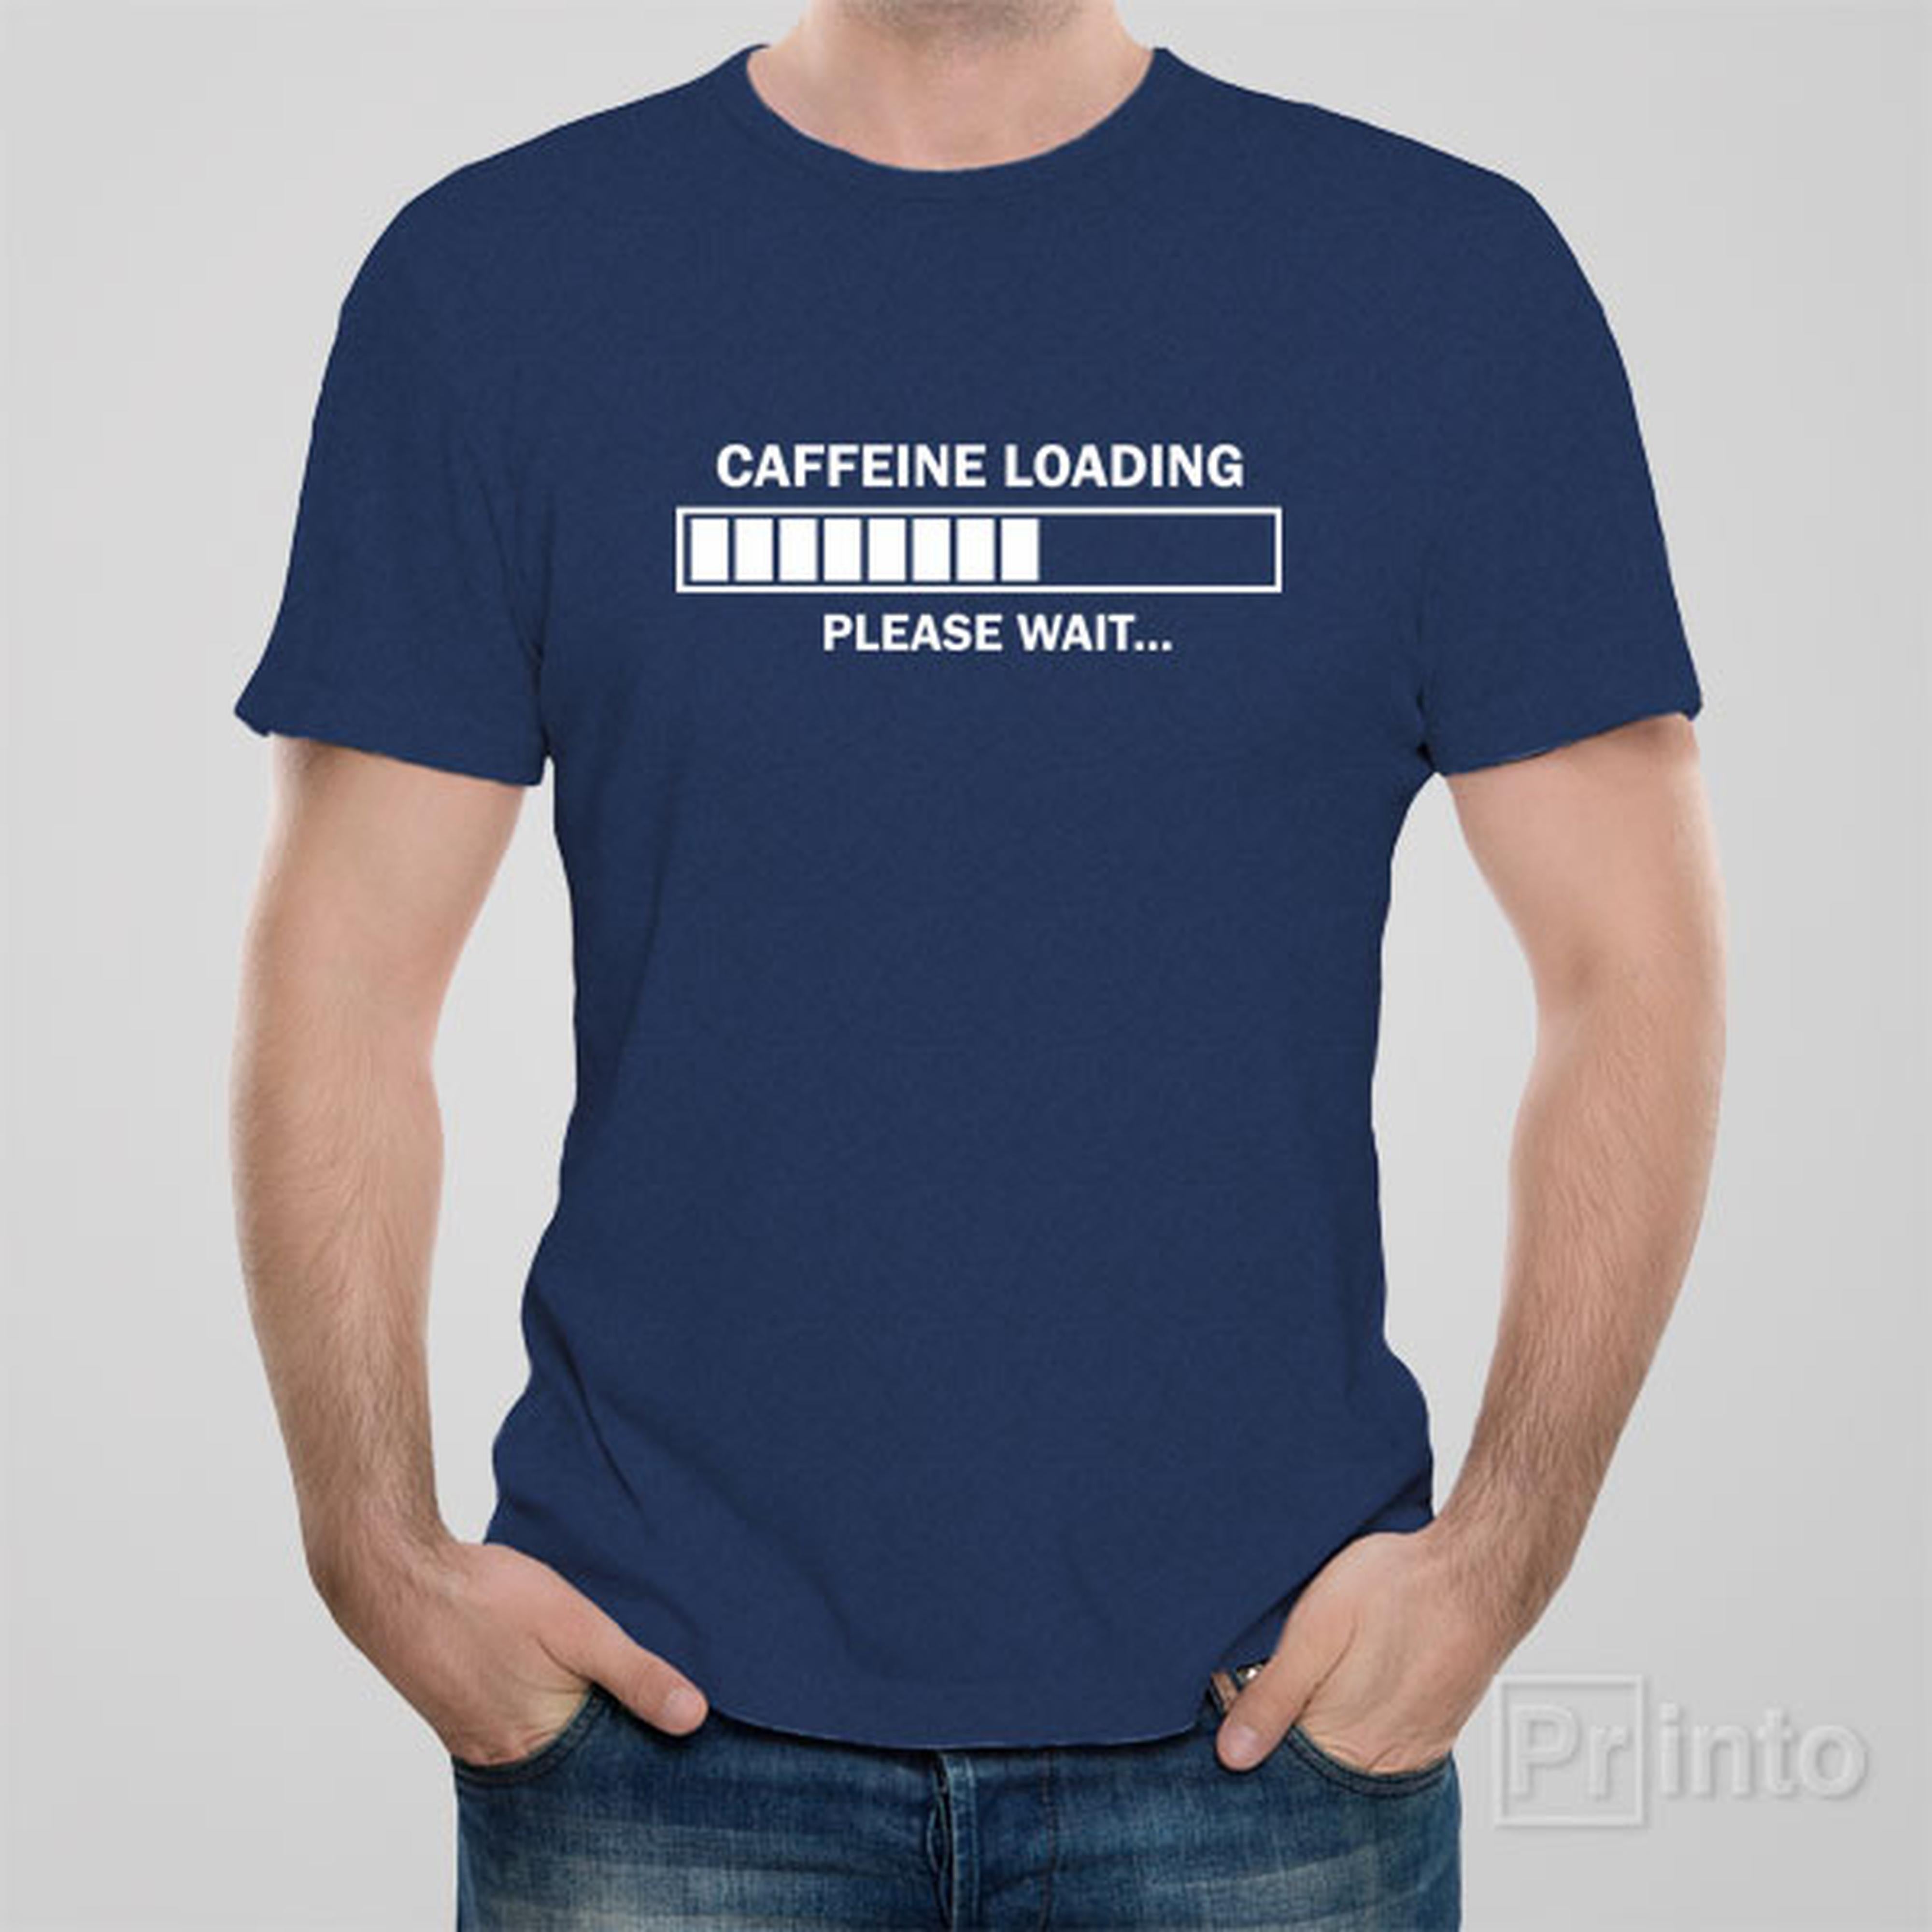 caffeine-loading-please-wait-t-shirt